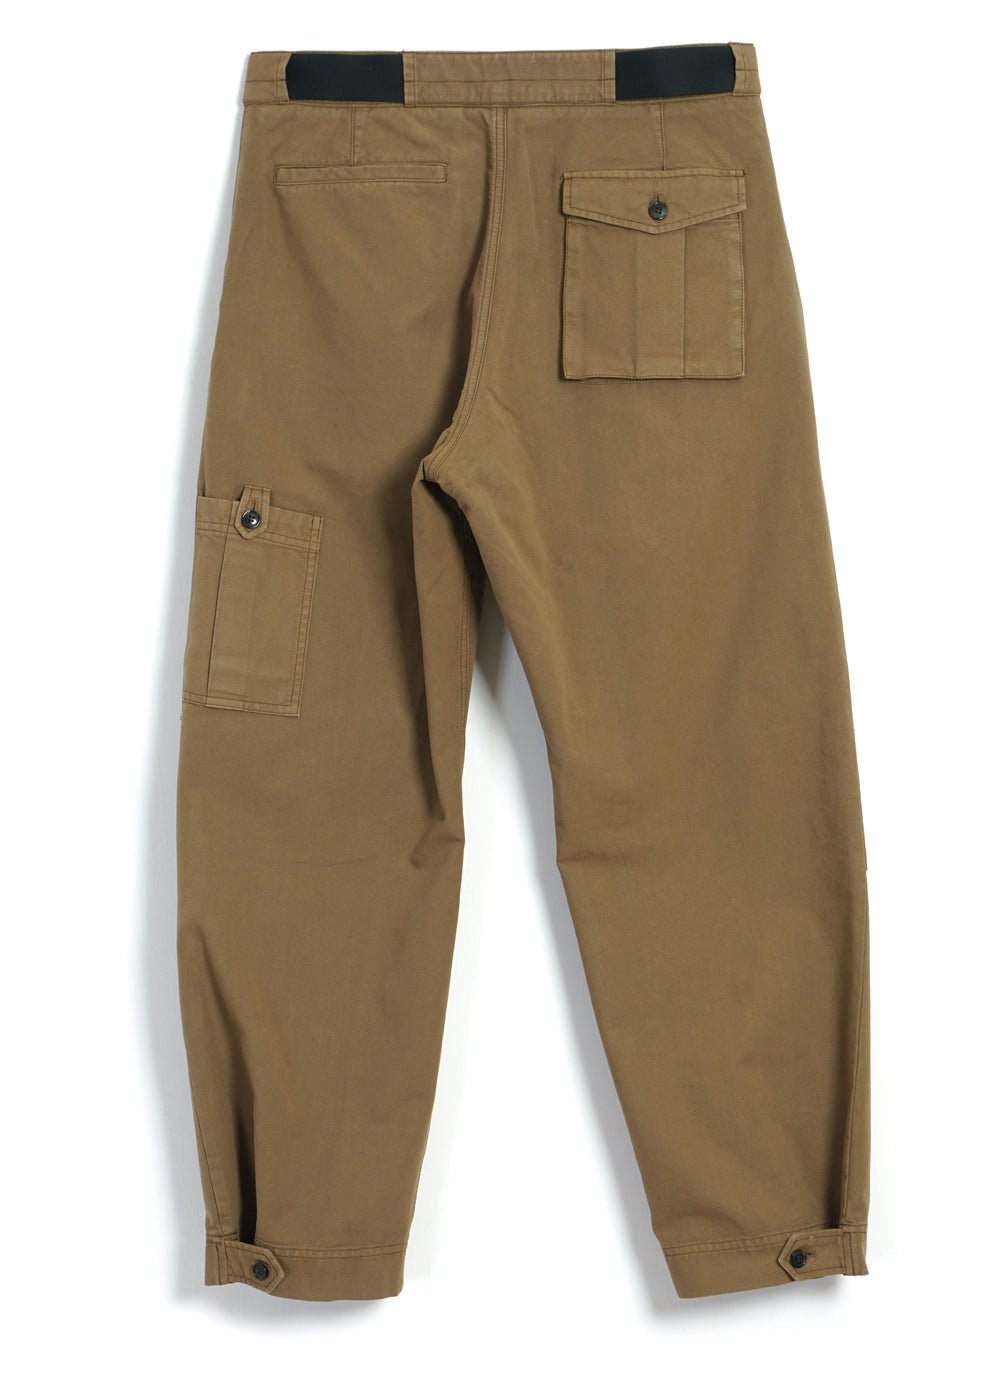 HANSEN GARMENTS - KARLO | Wide Cut Utility Trousers | Khaki - HANSEN Garments